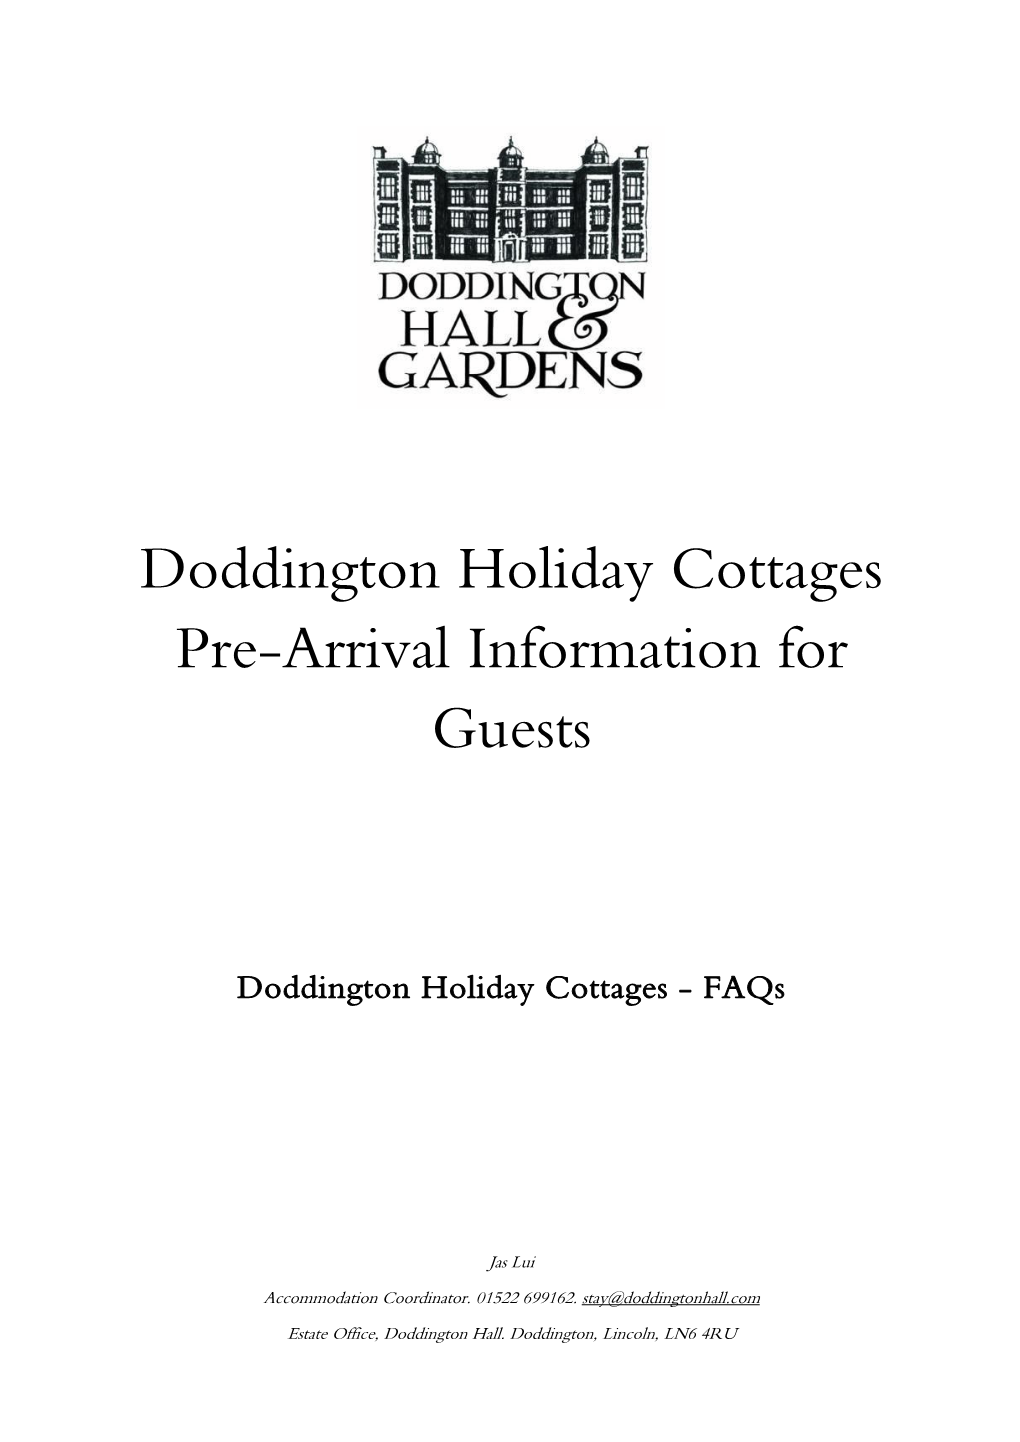 Doddington Holiday Cottages Pre-Arrival Information for Guests